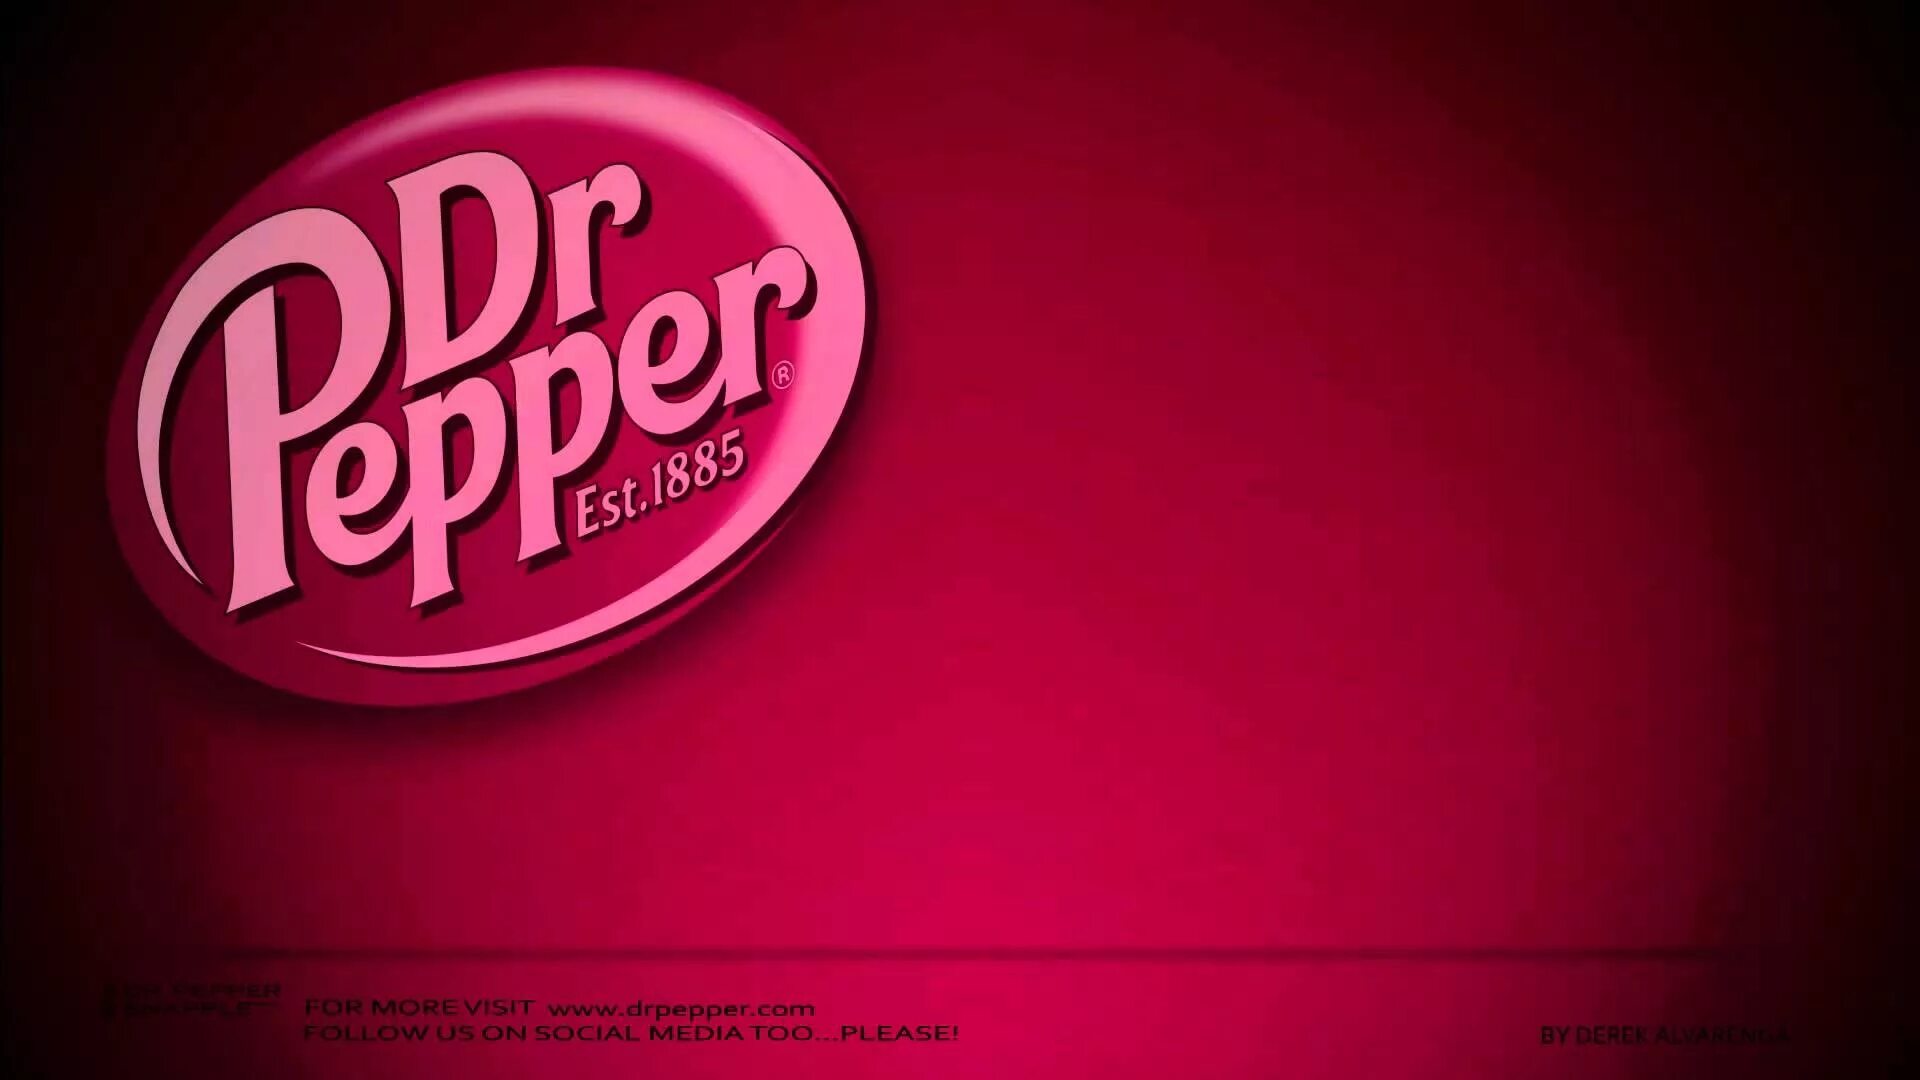 Pepper на русском языке. Доктор Пеппер. Обои Dr Pepper. Доктор Пеппер фон. Обои др Пеппер.